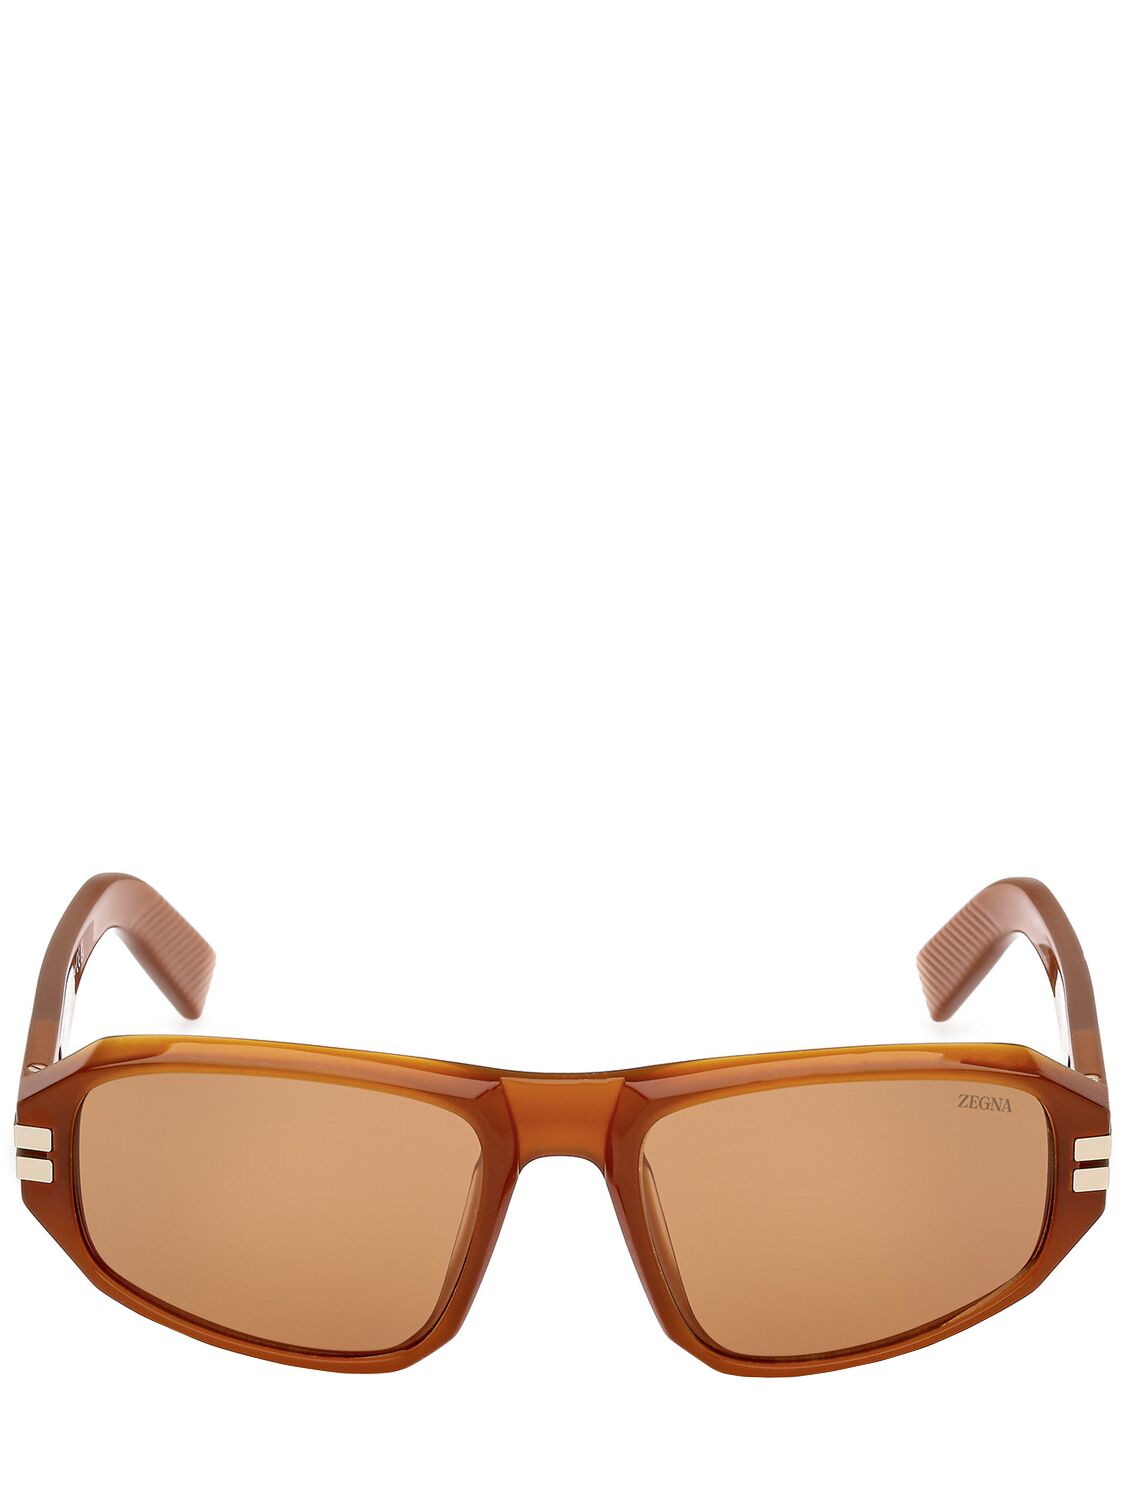 Image of Squared Sunglasses W/ Lanyard